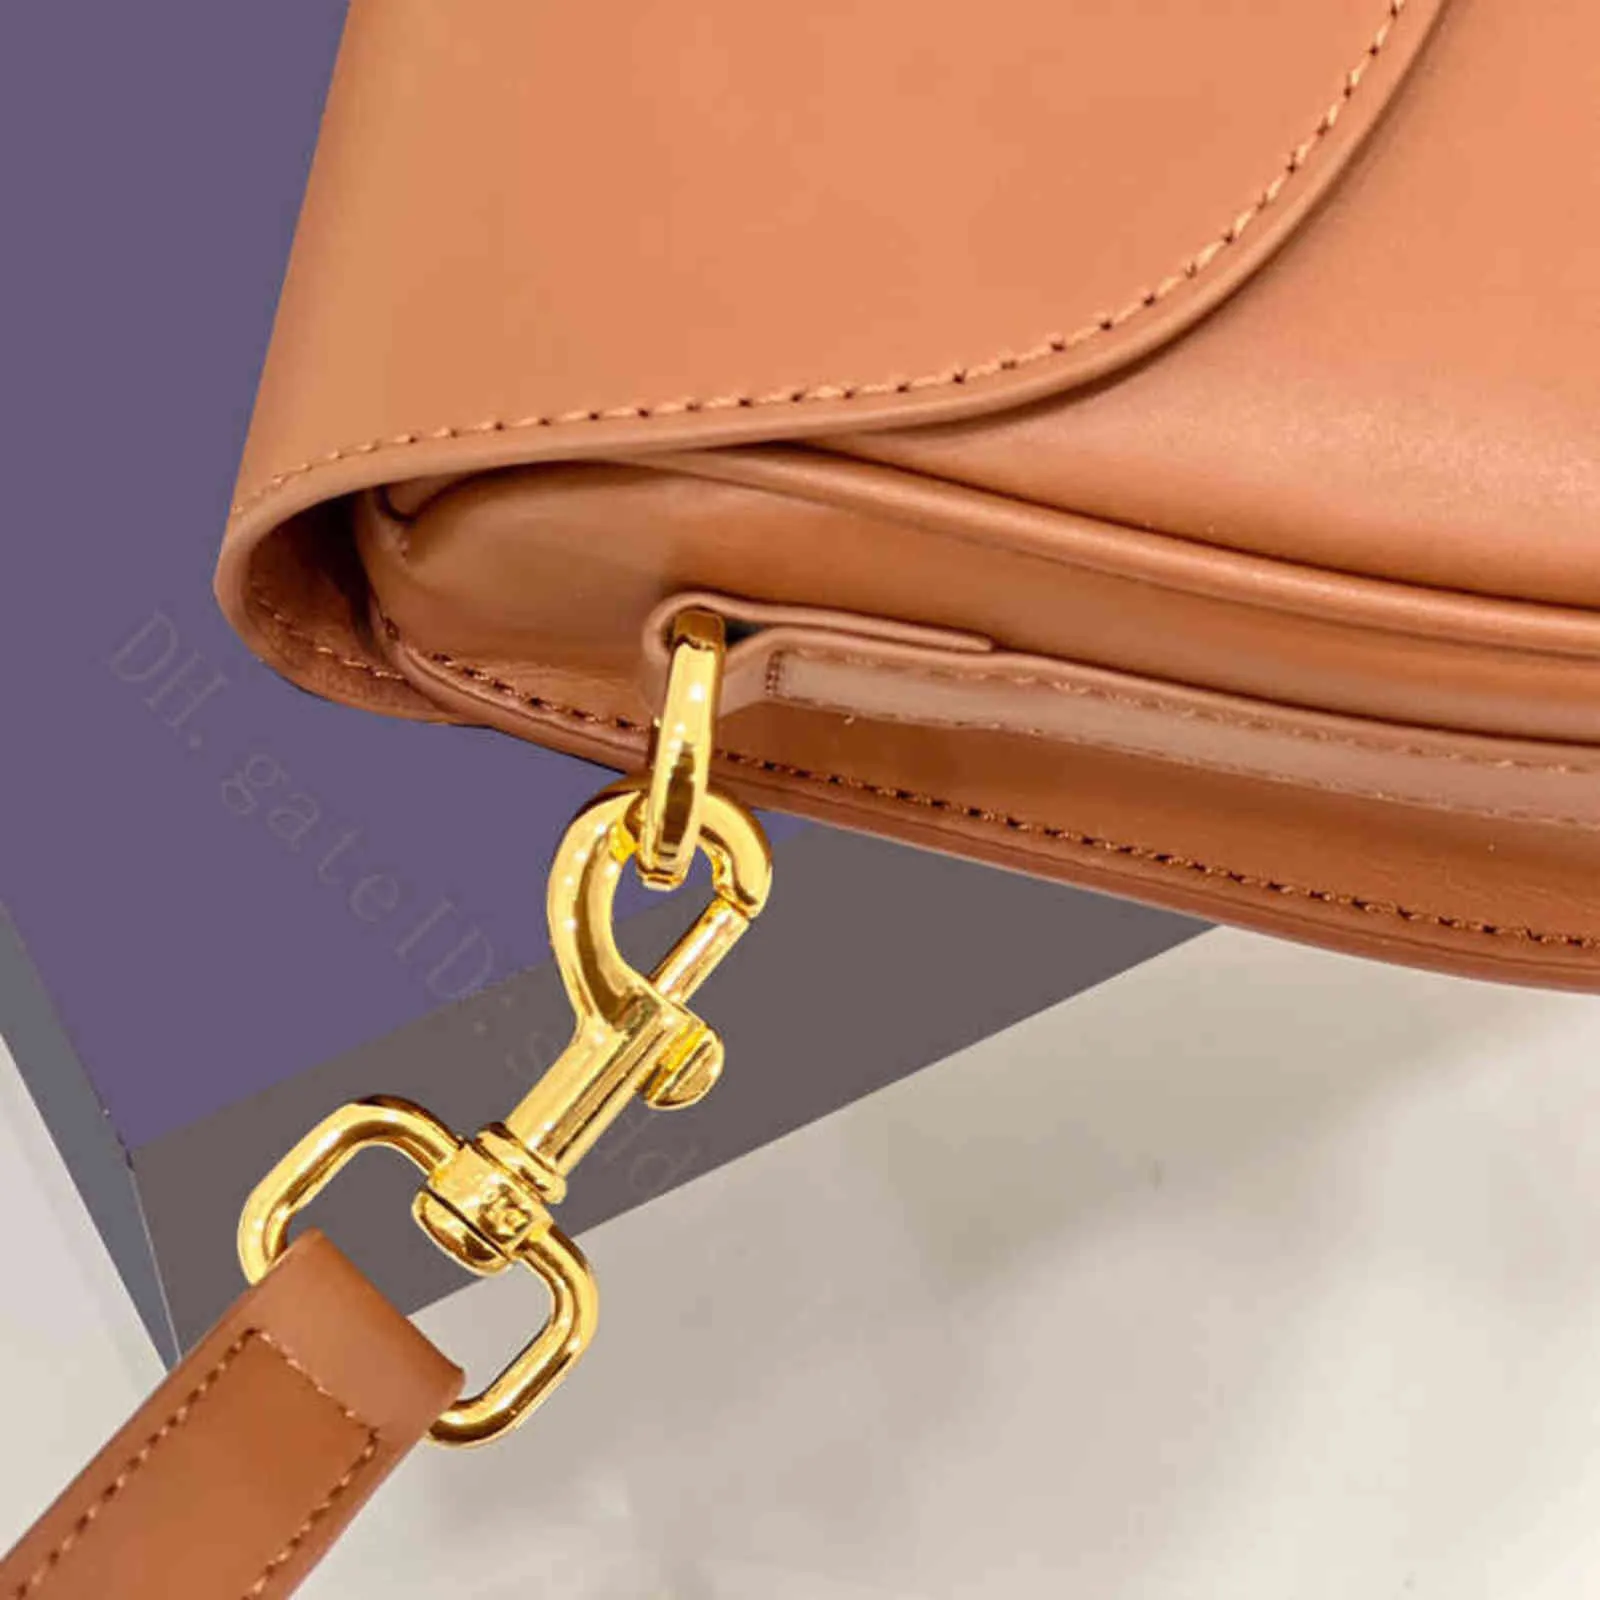 Fashion Saddle luxury Designer Bags New Messenger Handbags hot lady Drew shoulder cross body Envelope letter plain wallets hasp flap great Totes Top quality purse